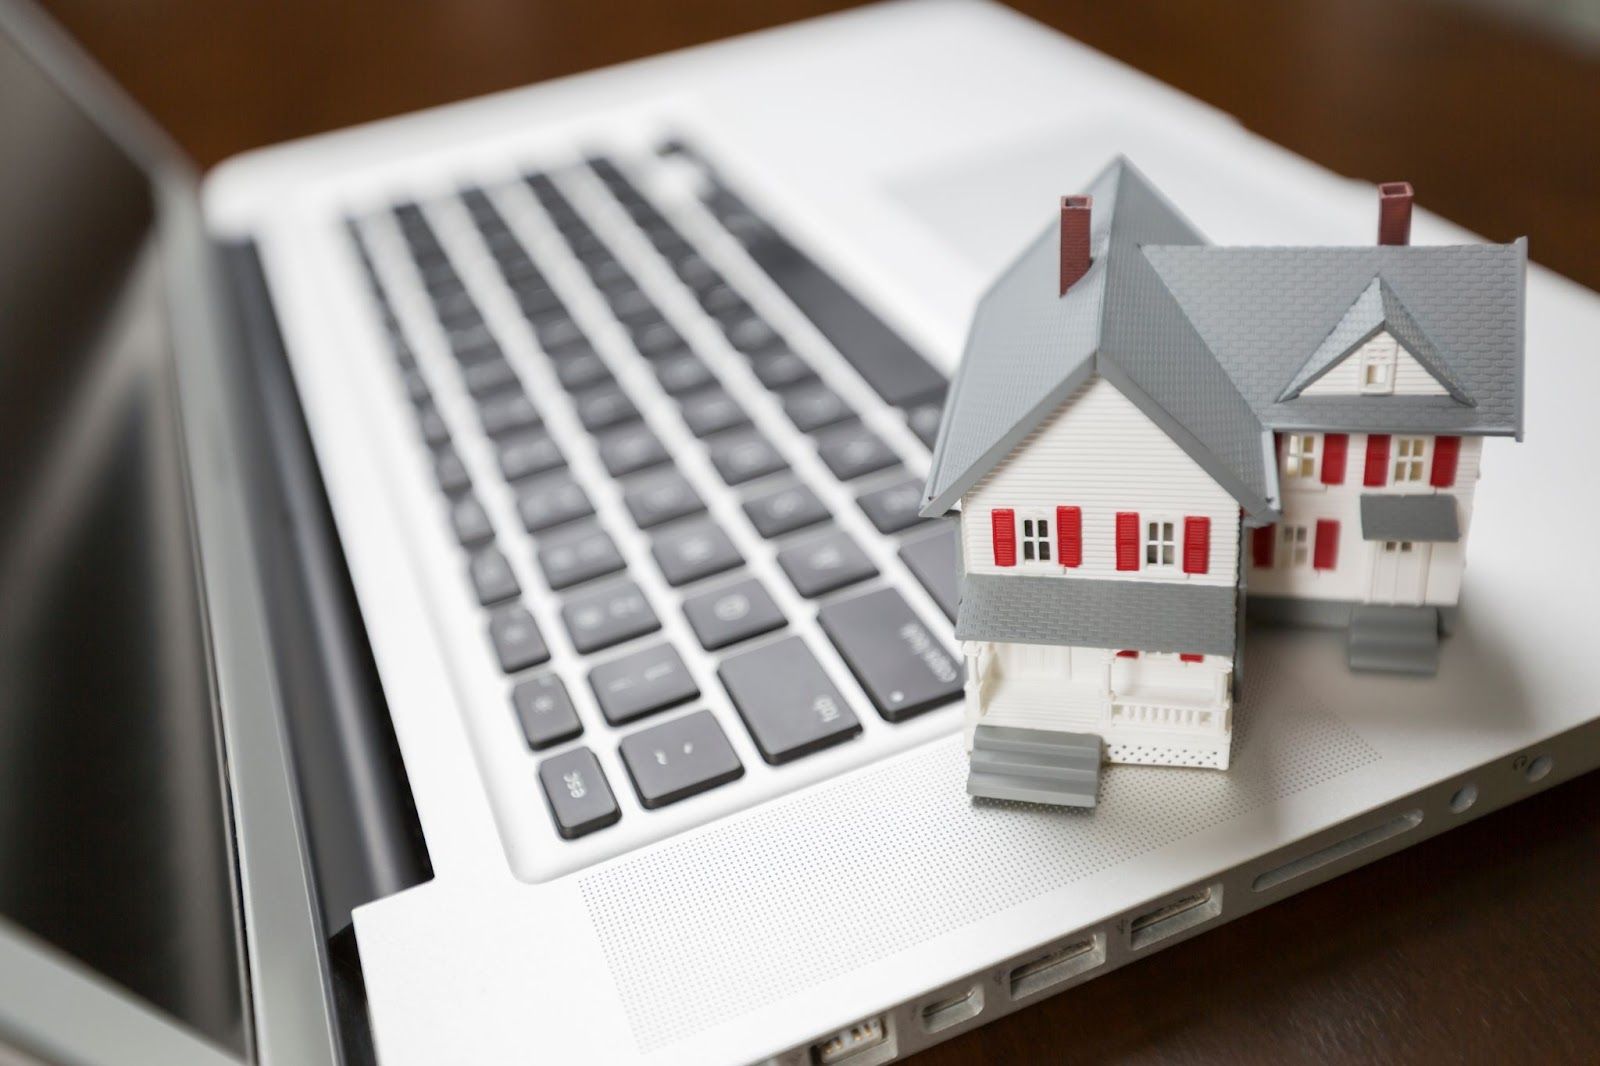 Model gray house balances on open laptop